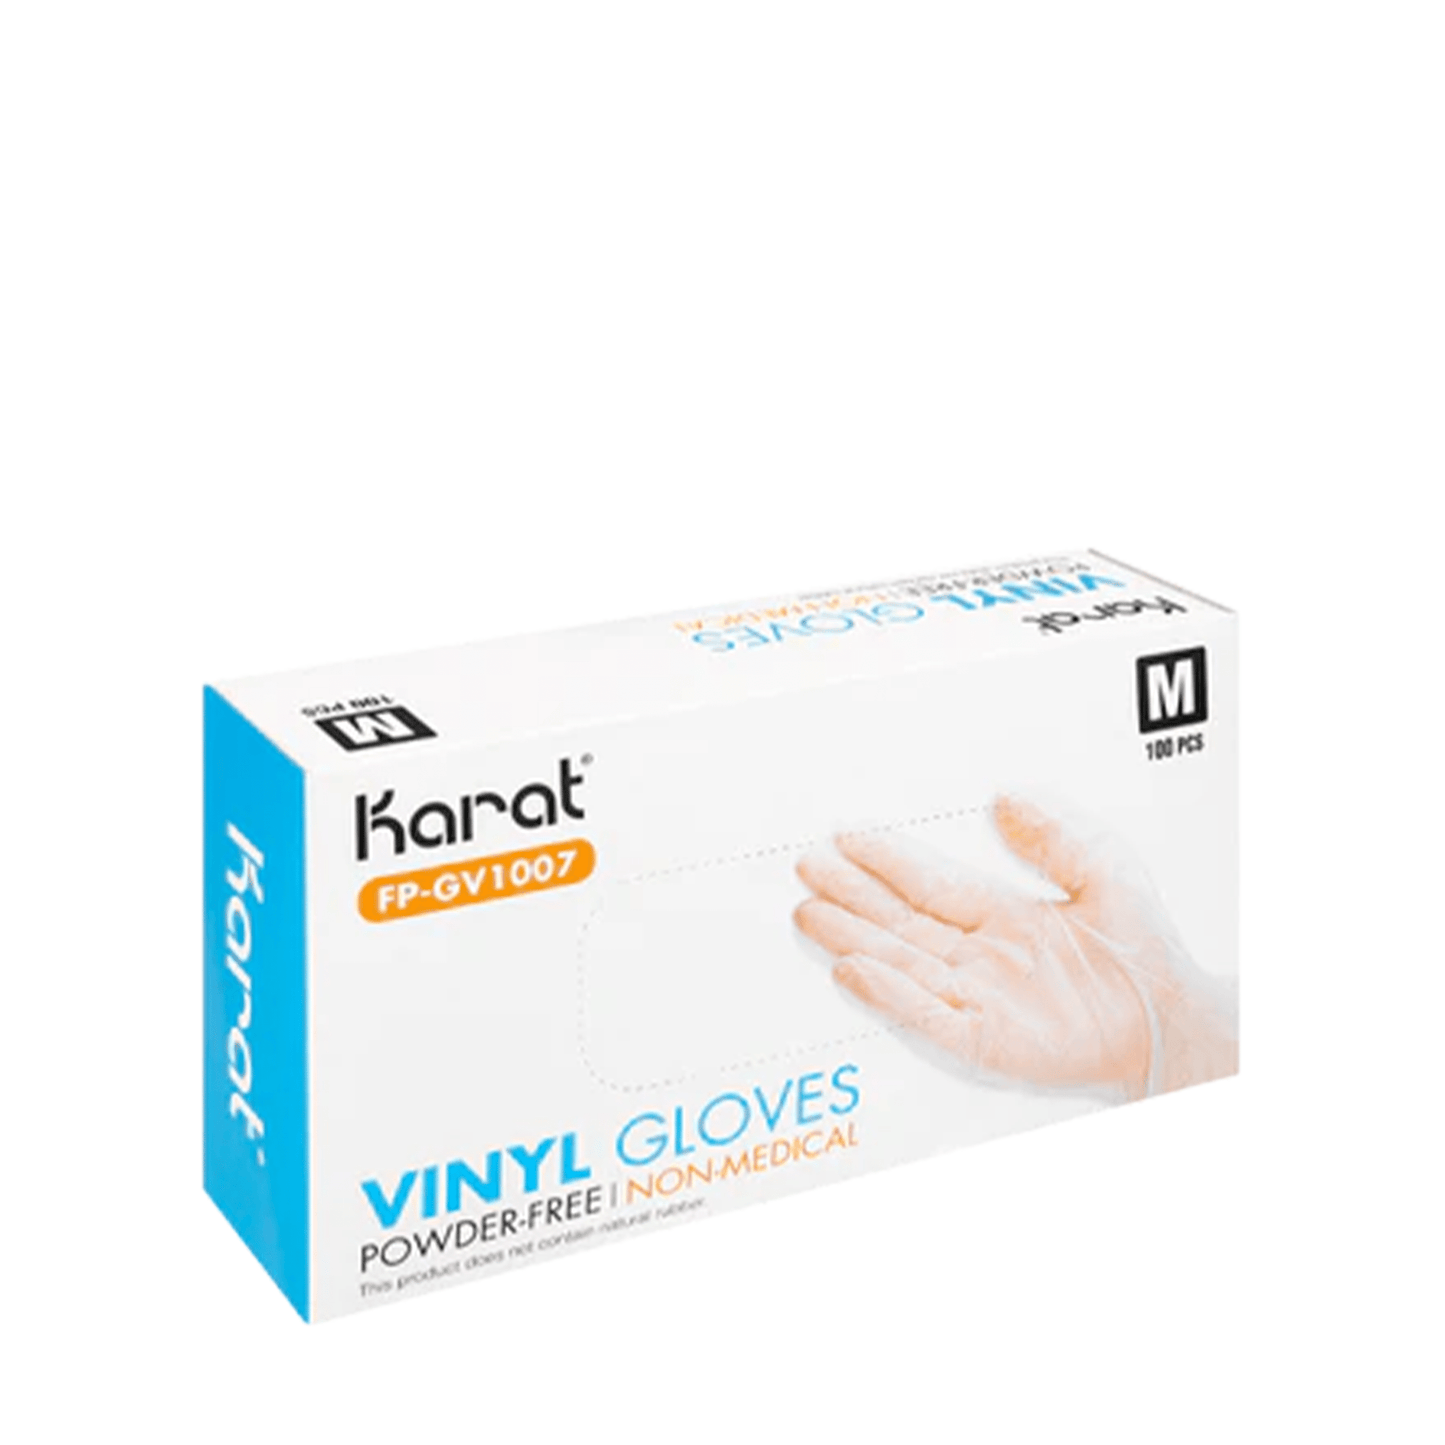 Karat Clear Vinyl Powder-Free Gloves - Medium - 1000ct